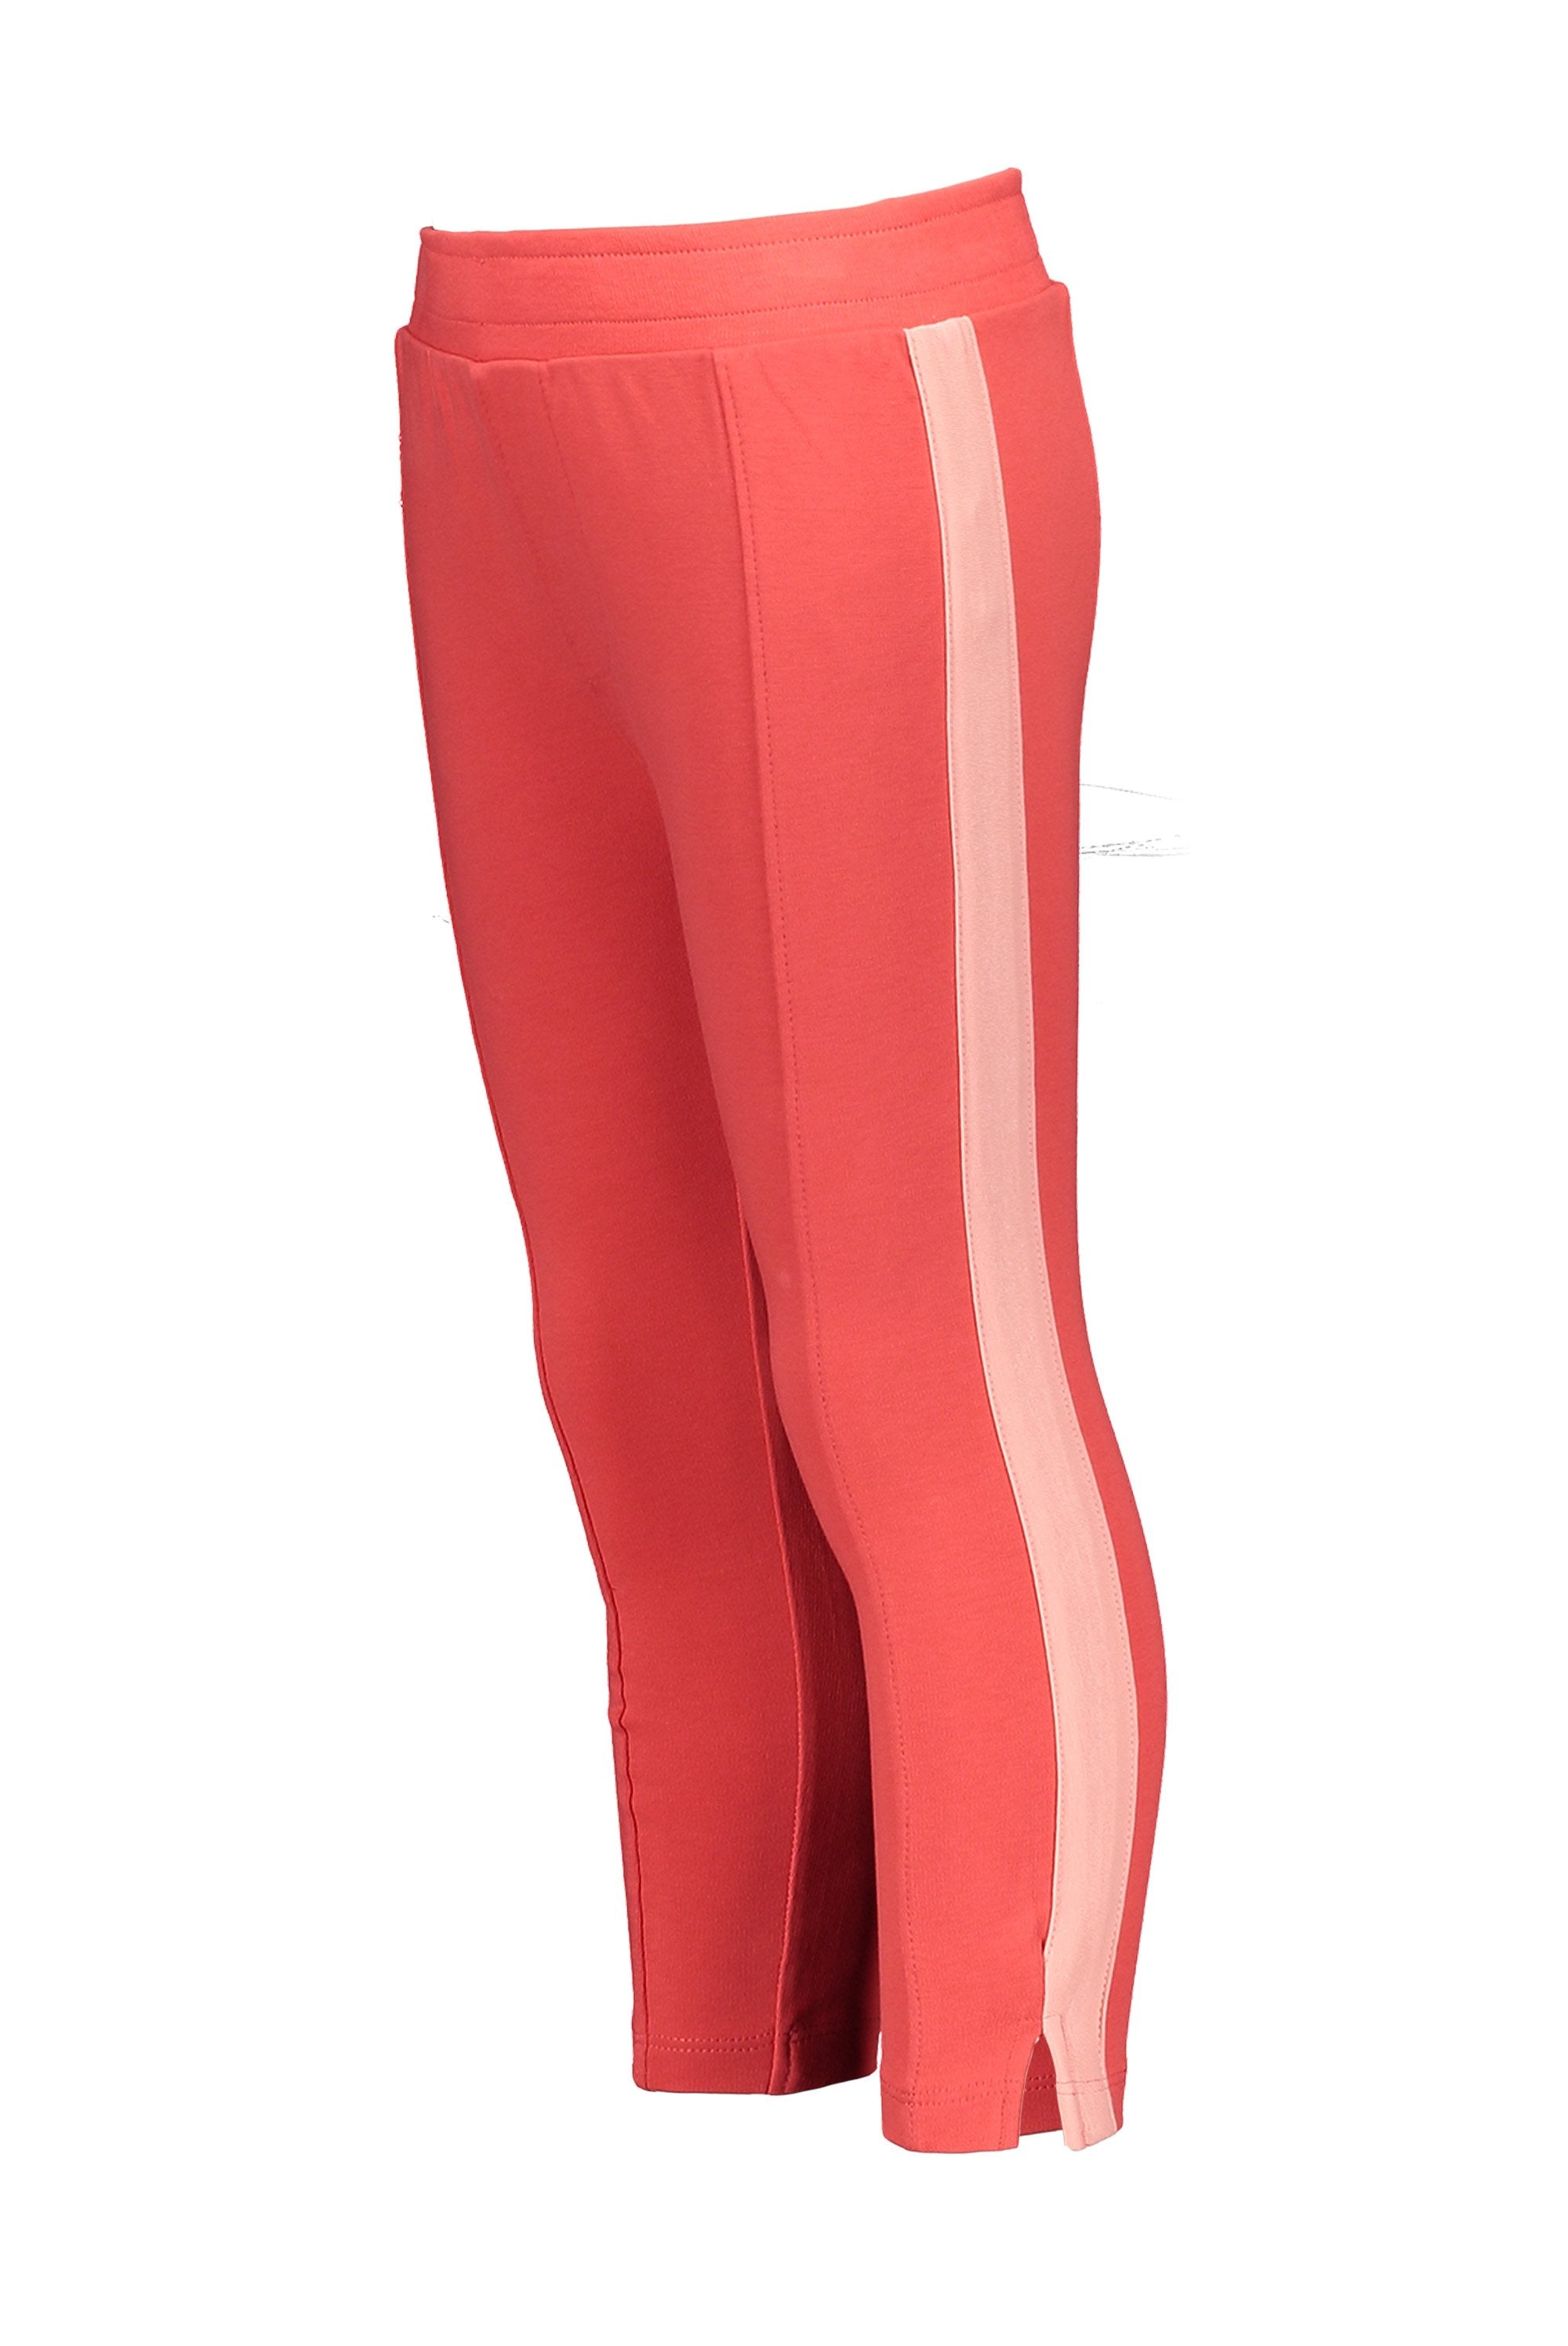 Meisjes Pant Pintuck Leg van Moodstreet in de kleur Red in maat 134/140.